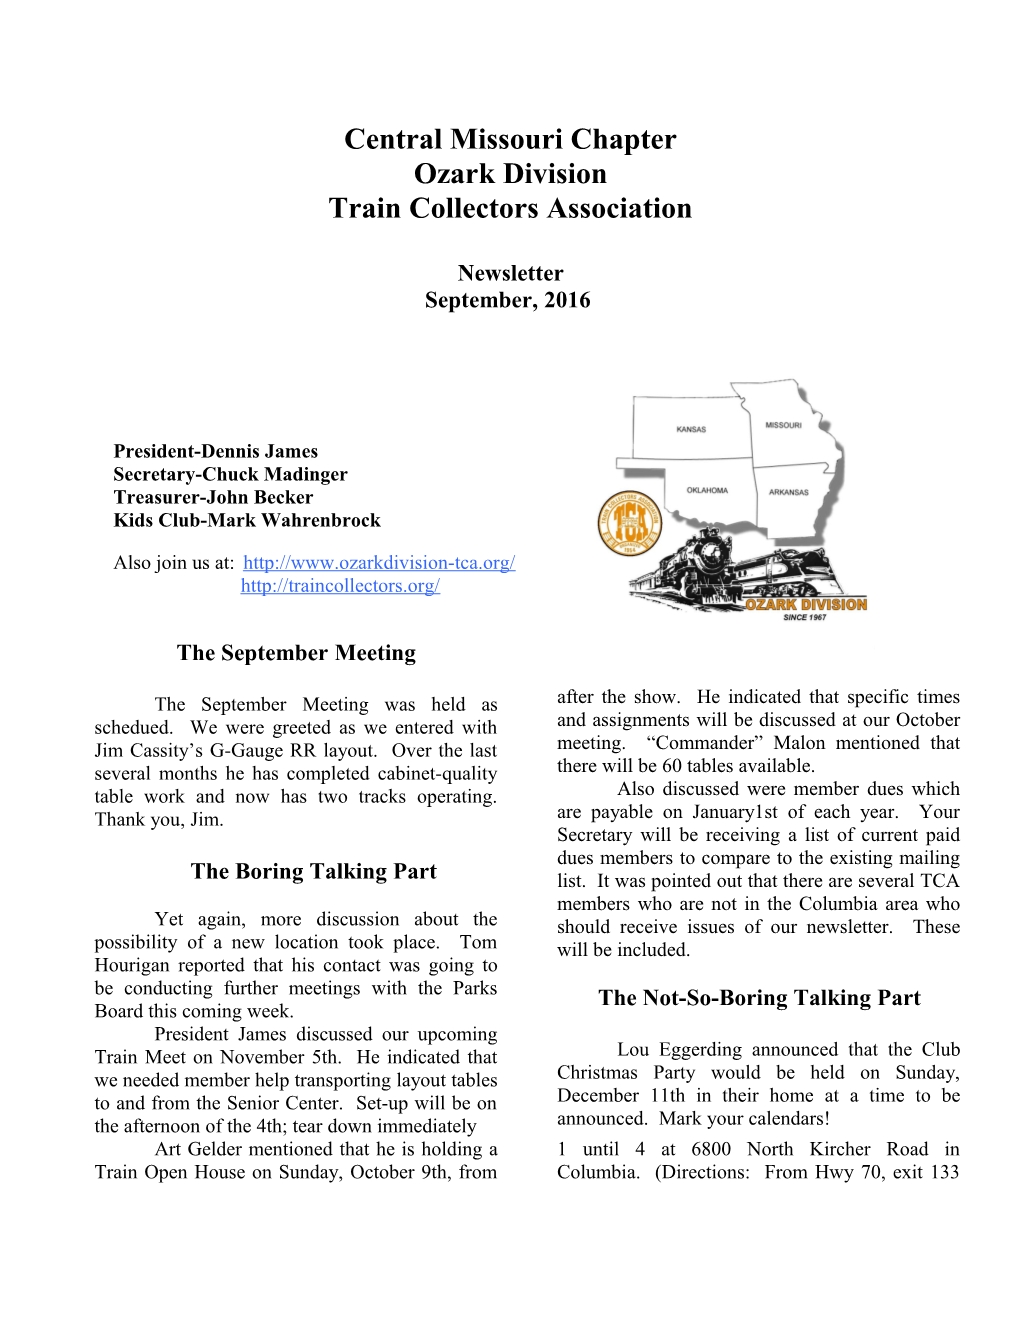 Central Missouri Chapter TCA Newsletter